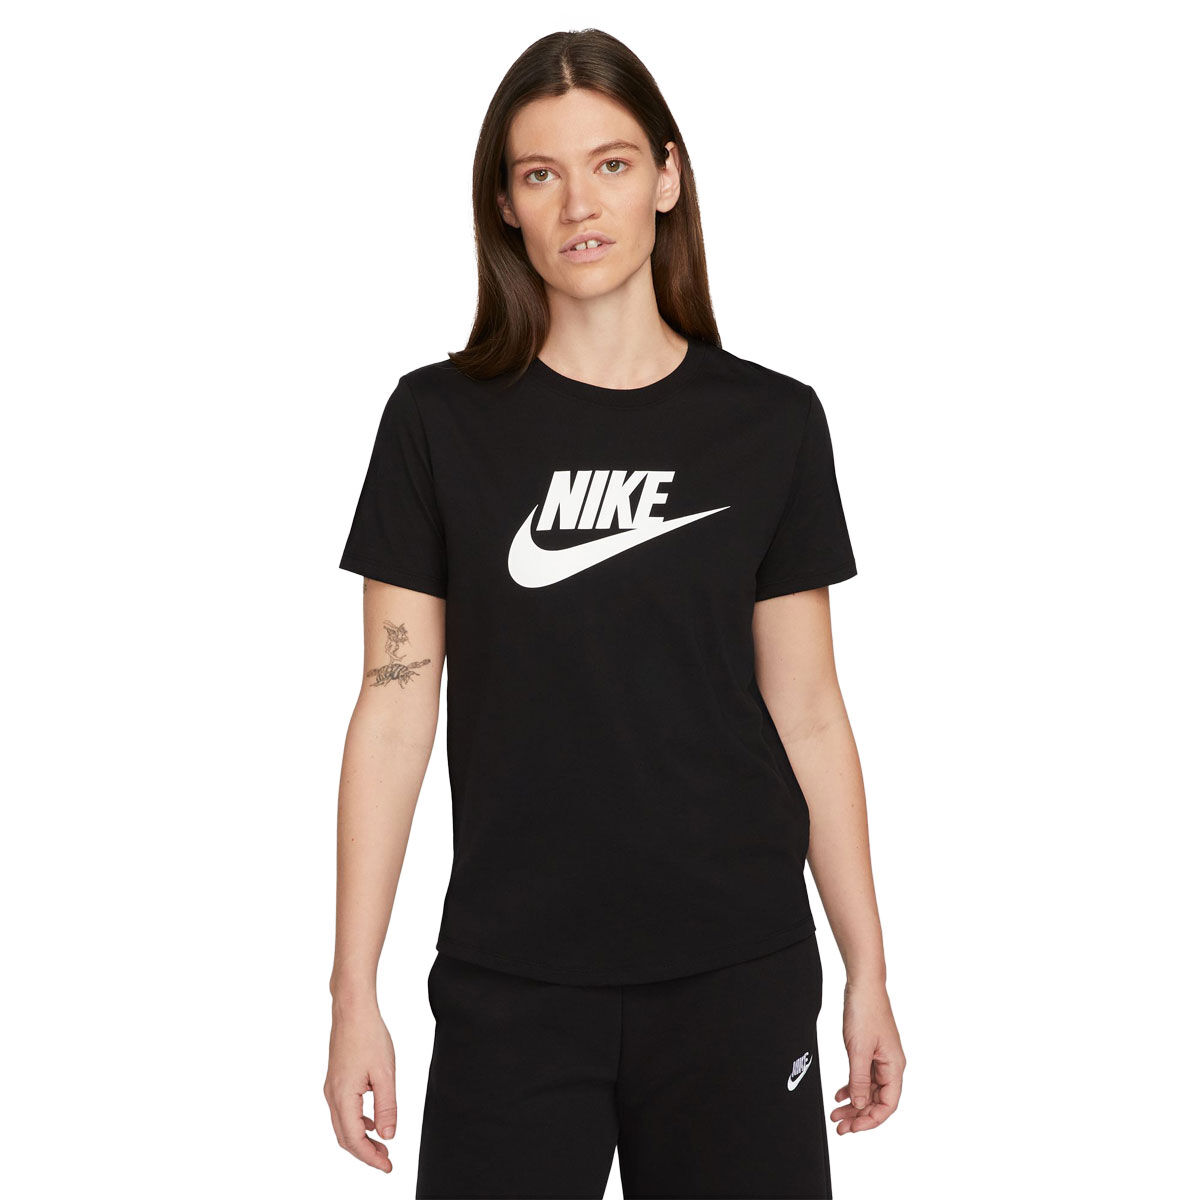 Nike Yoga Training Top Women's Size Medium, Dri Fit Shirt, Black